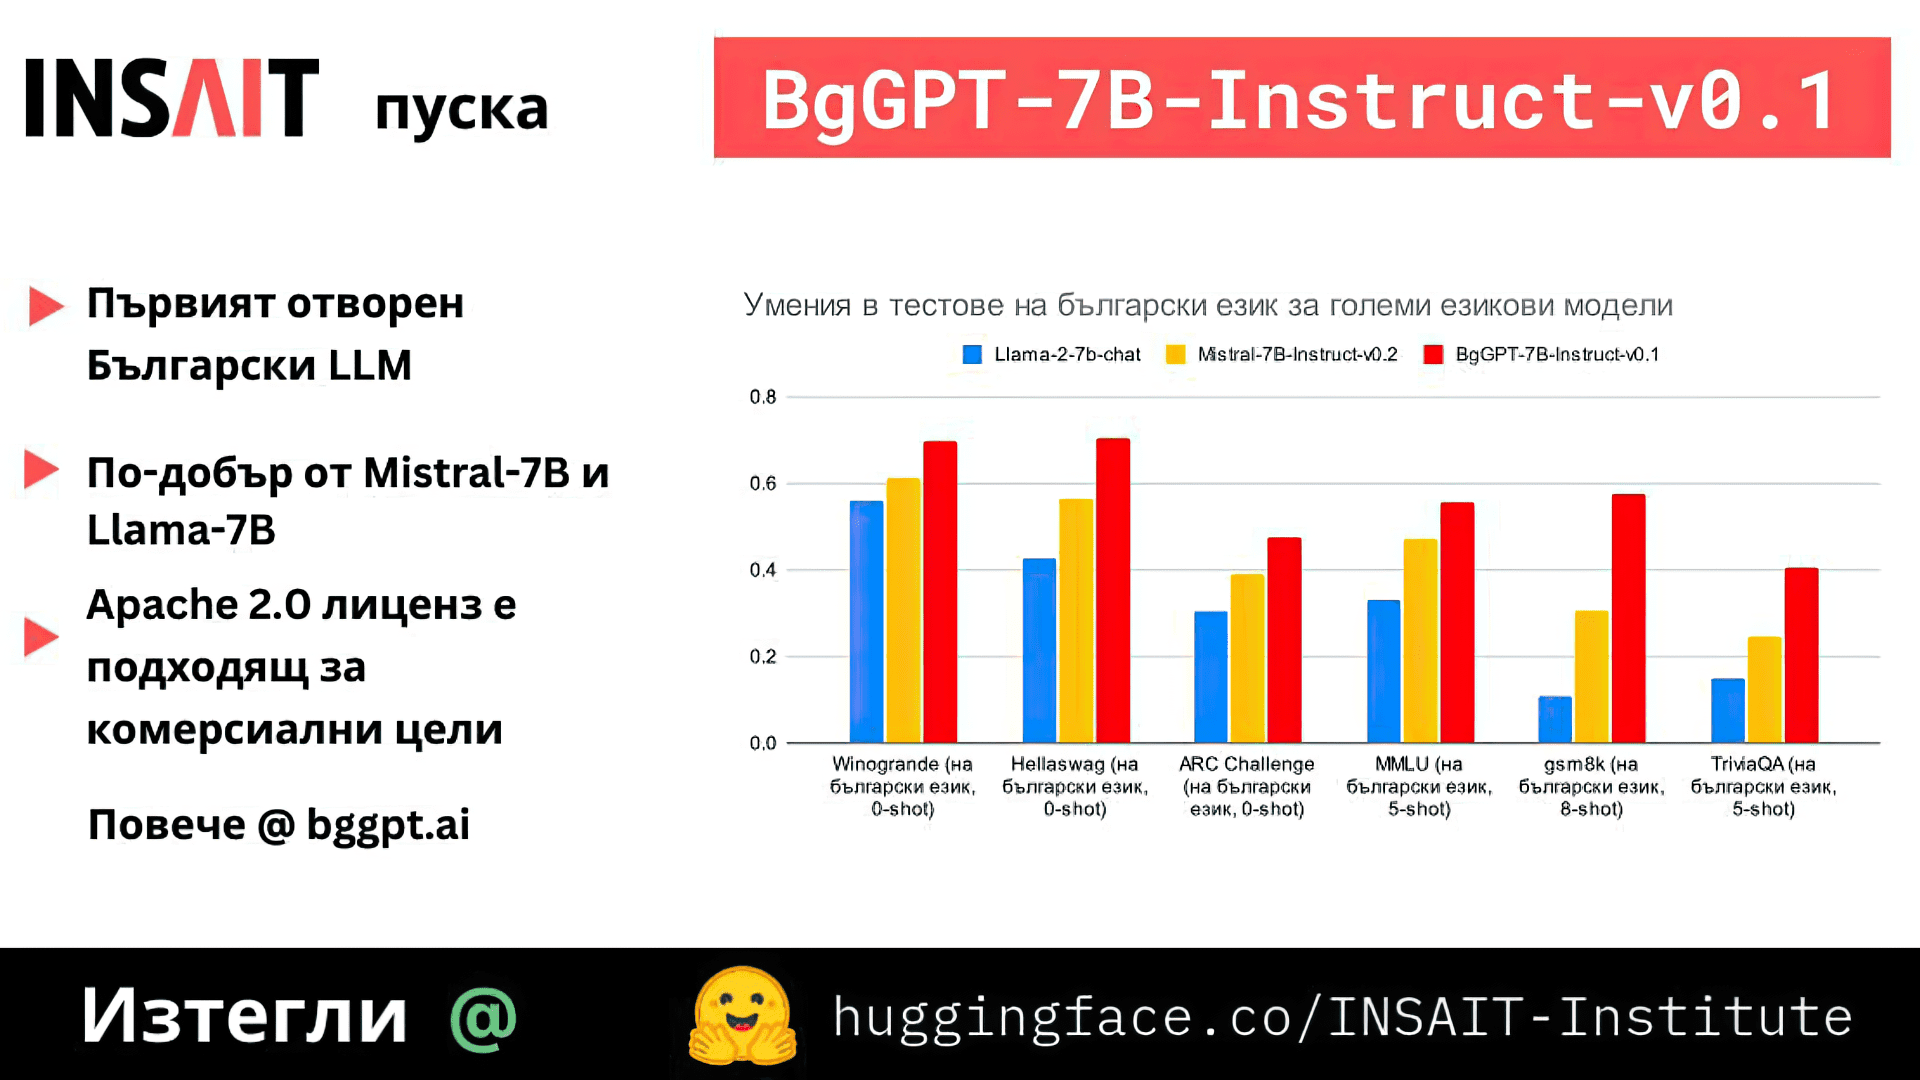 BGGPT-7B-Instruct-v0.1